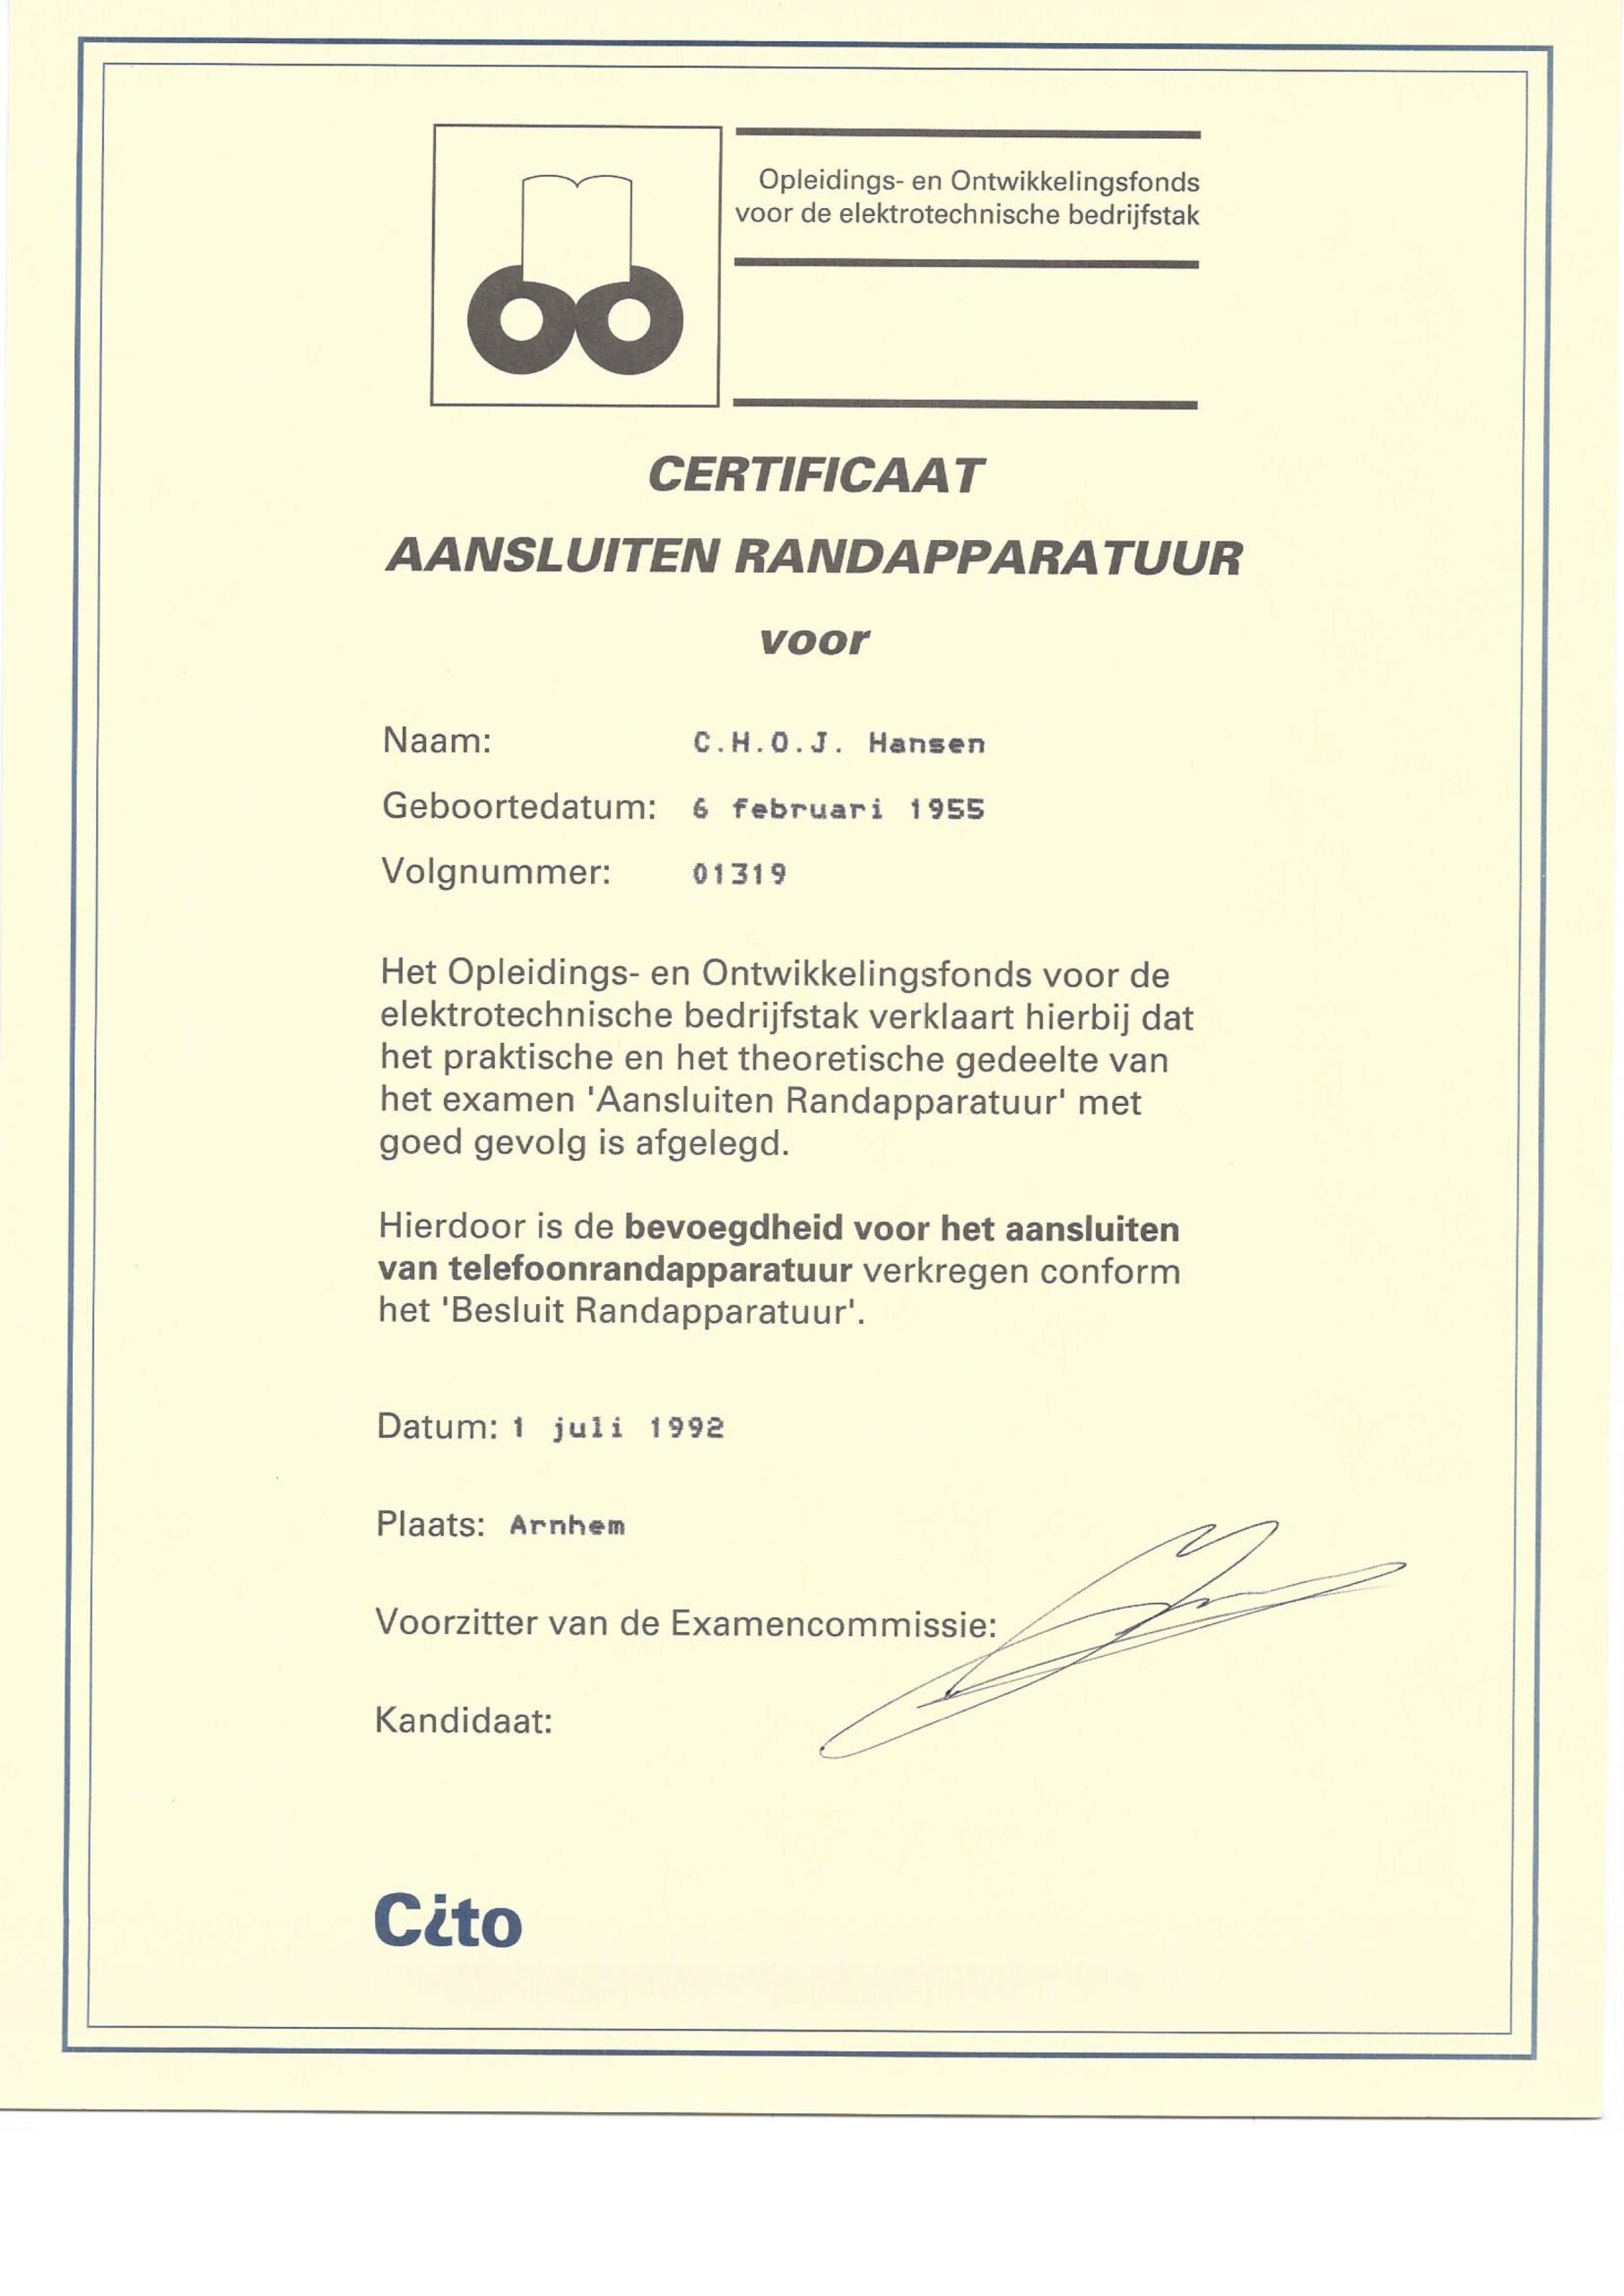 1992 - CITO - Aansluiten randapparatuur-1